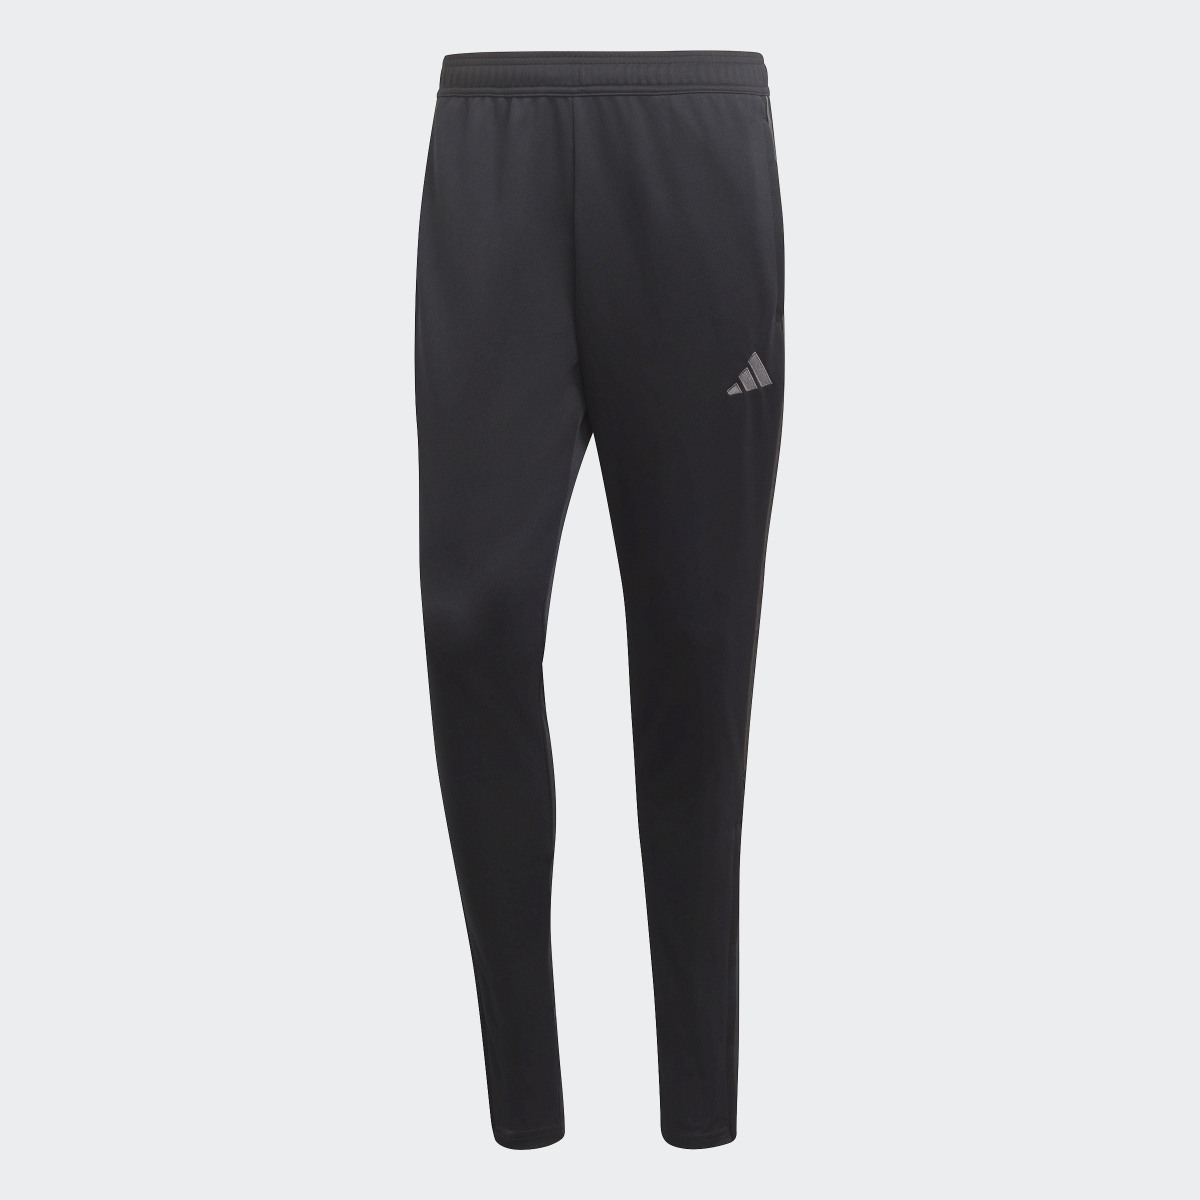 Adidas Tiro Pants - HY7585